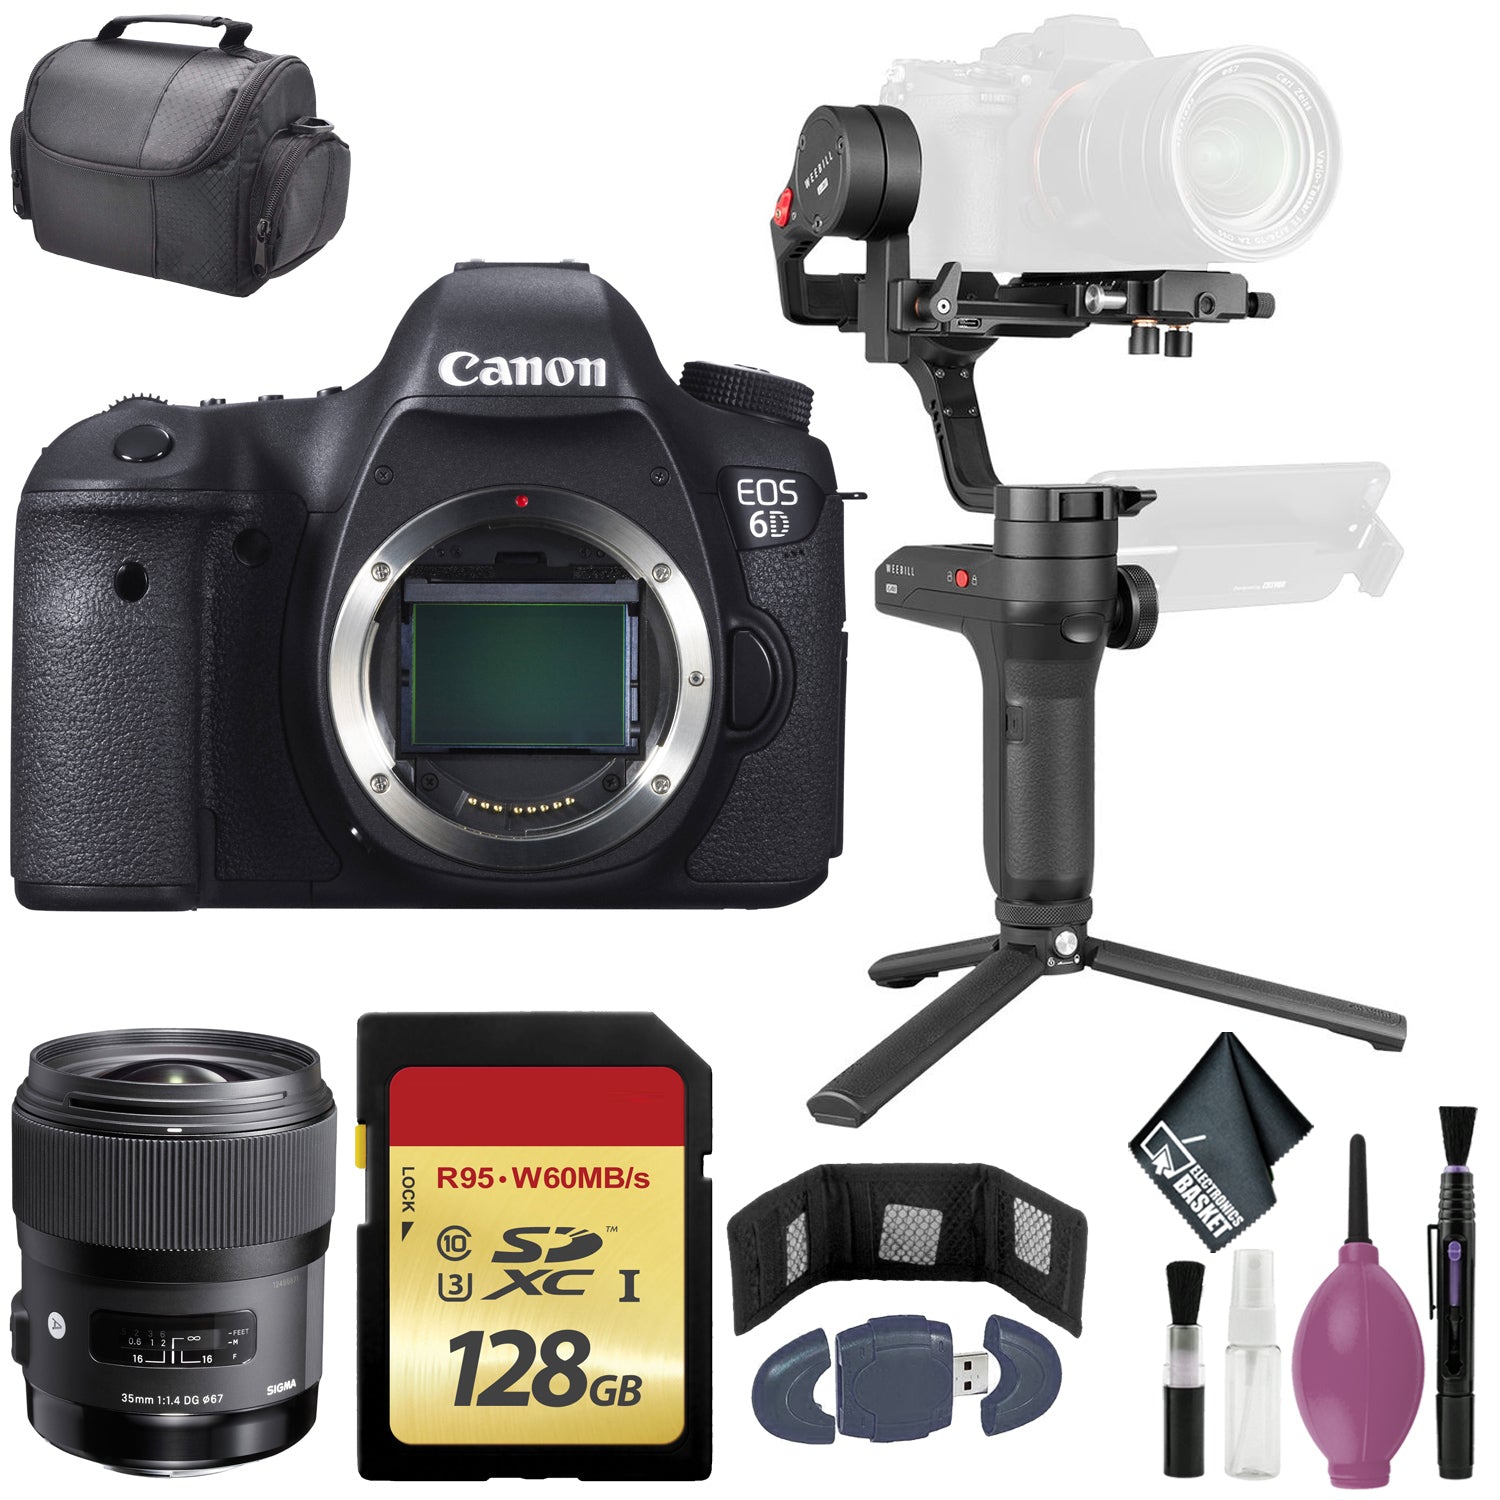 Zhiyun-Tech WEEBILL LAB Handheld Stabilizer - CANON EOS 6D PRO DIG CAMERA BODY - 128GB -Case -Canon EF 35mm f/1.4L II USM Lens